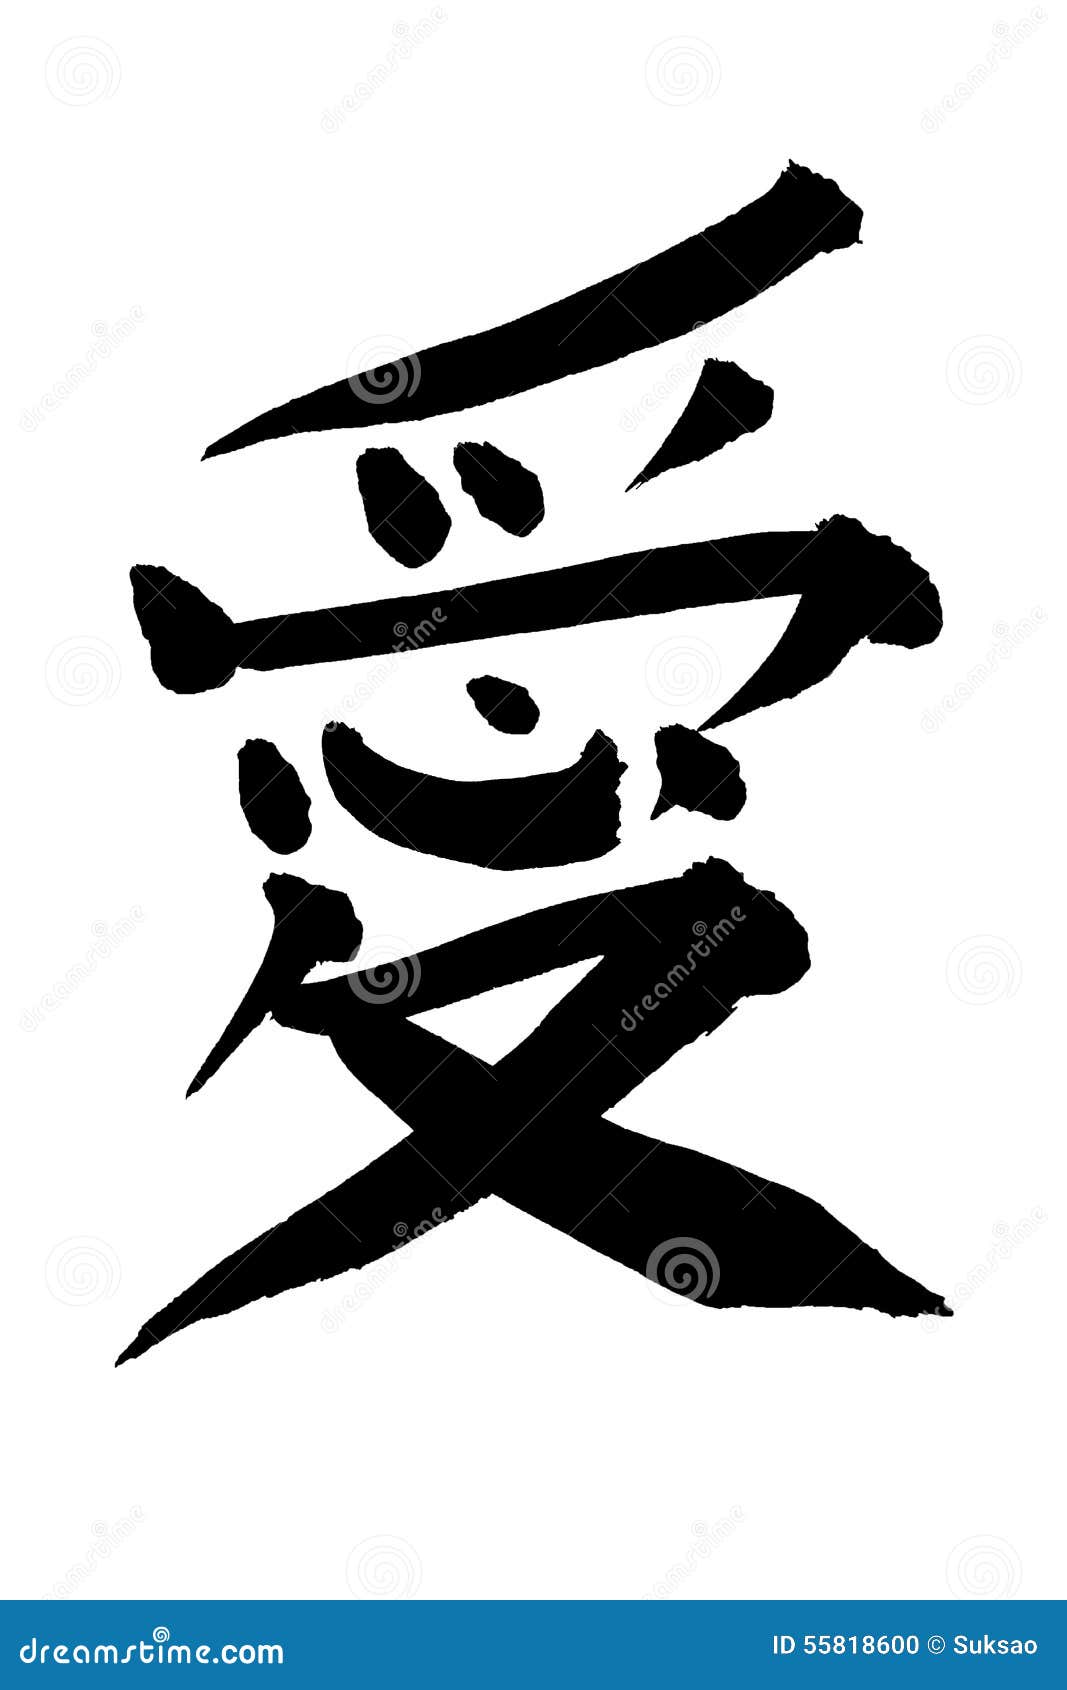 Japanese character stock illustration. Illustration of asian - 55818600